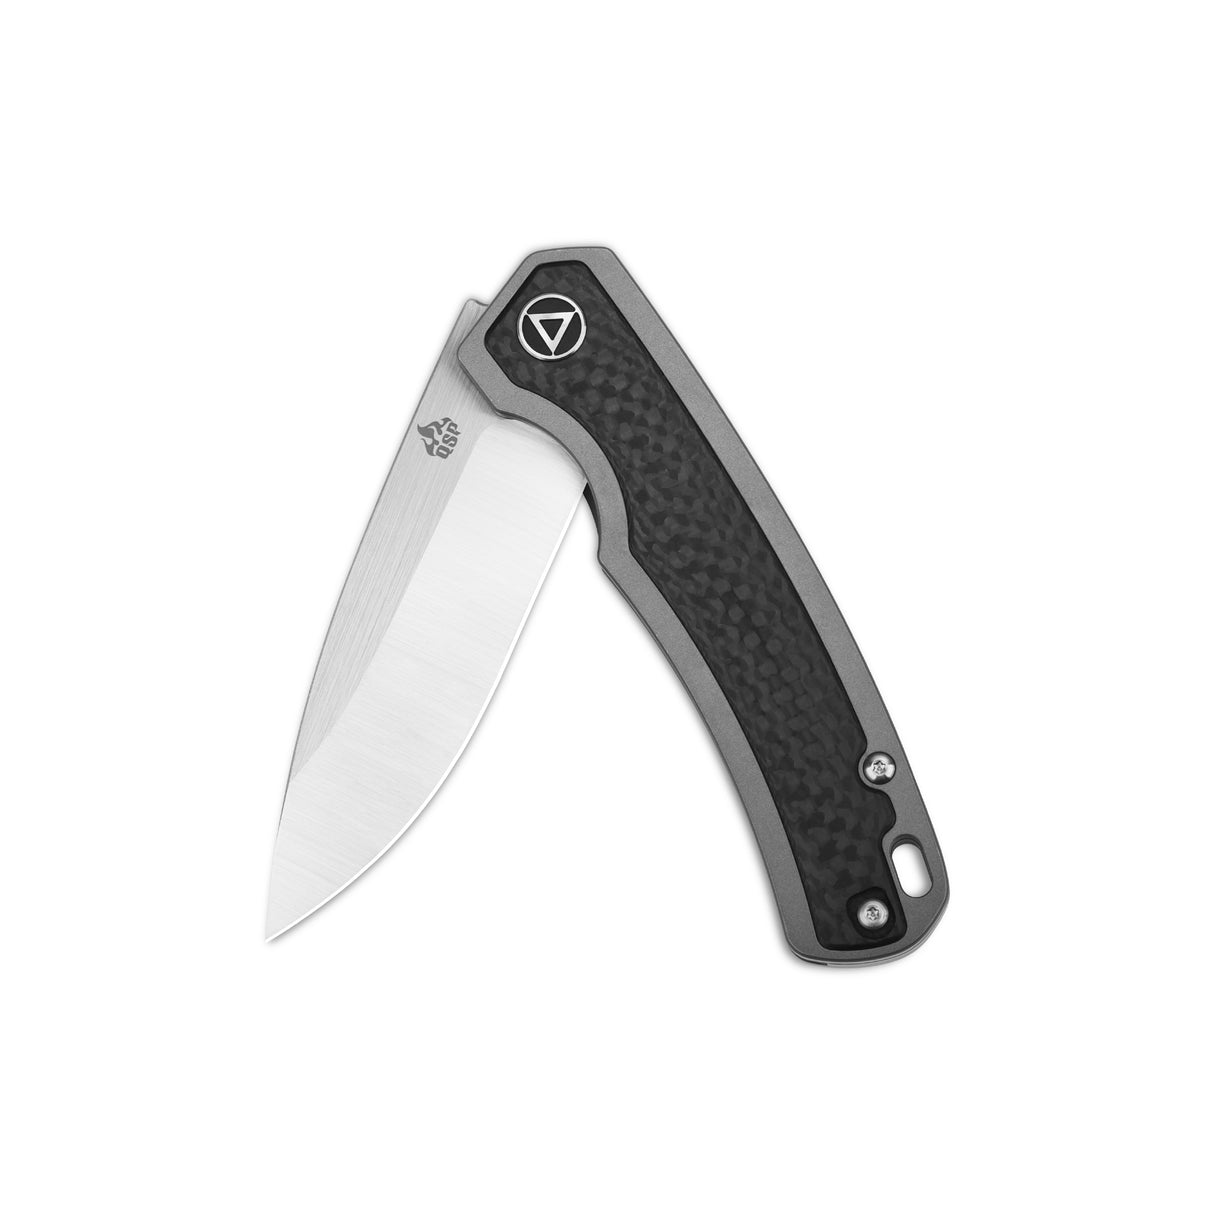 QSP Puffin Frame Lock Pocket Knife CPM S35VN Blade Titanium Handle with Carbon Fiber inlay